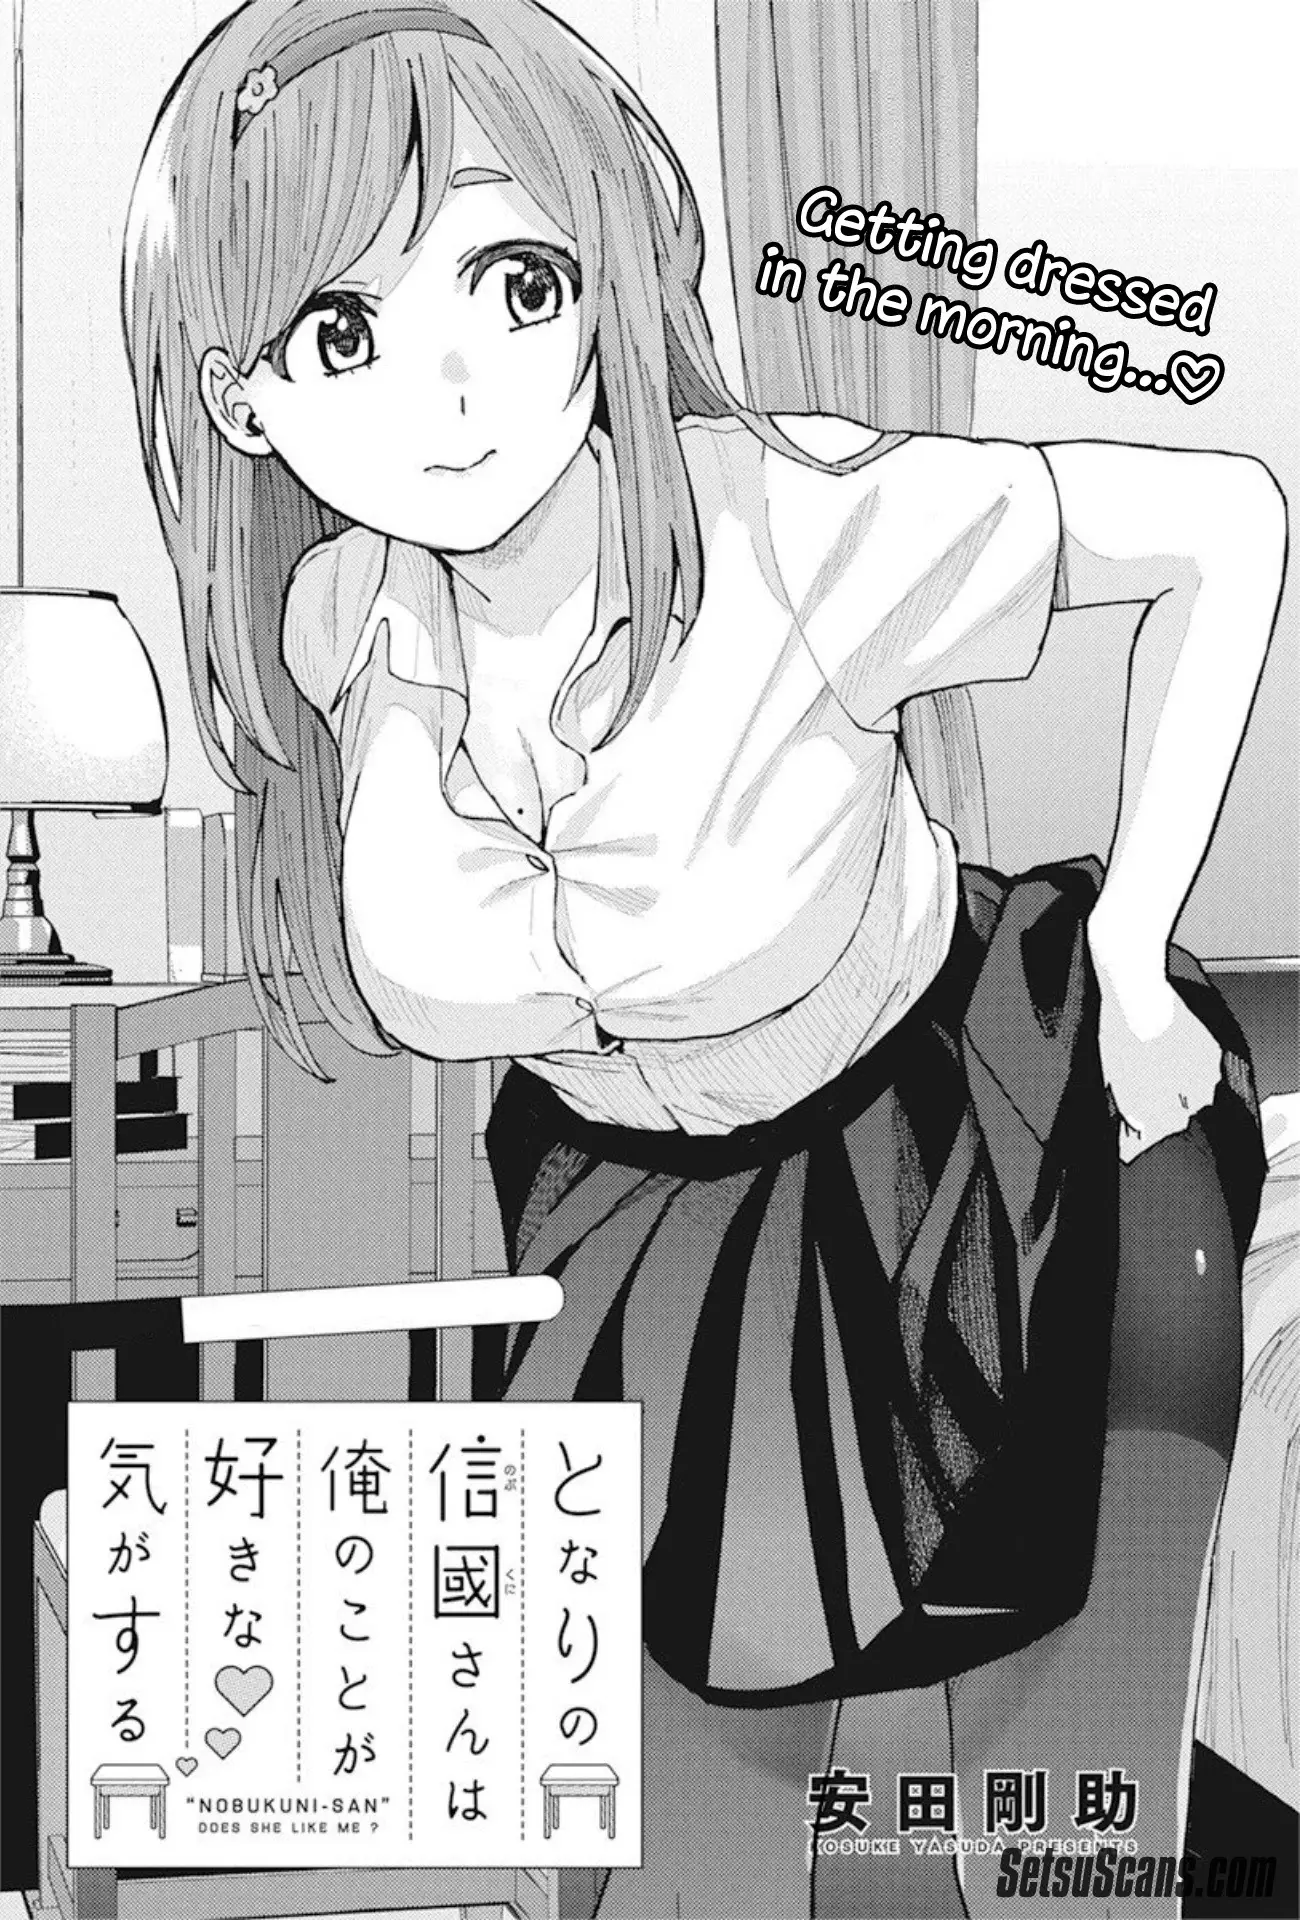 "nobukuni-San" Does She Like Me? - 5 page 2